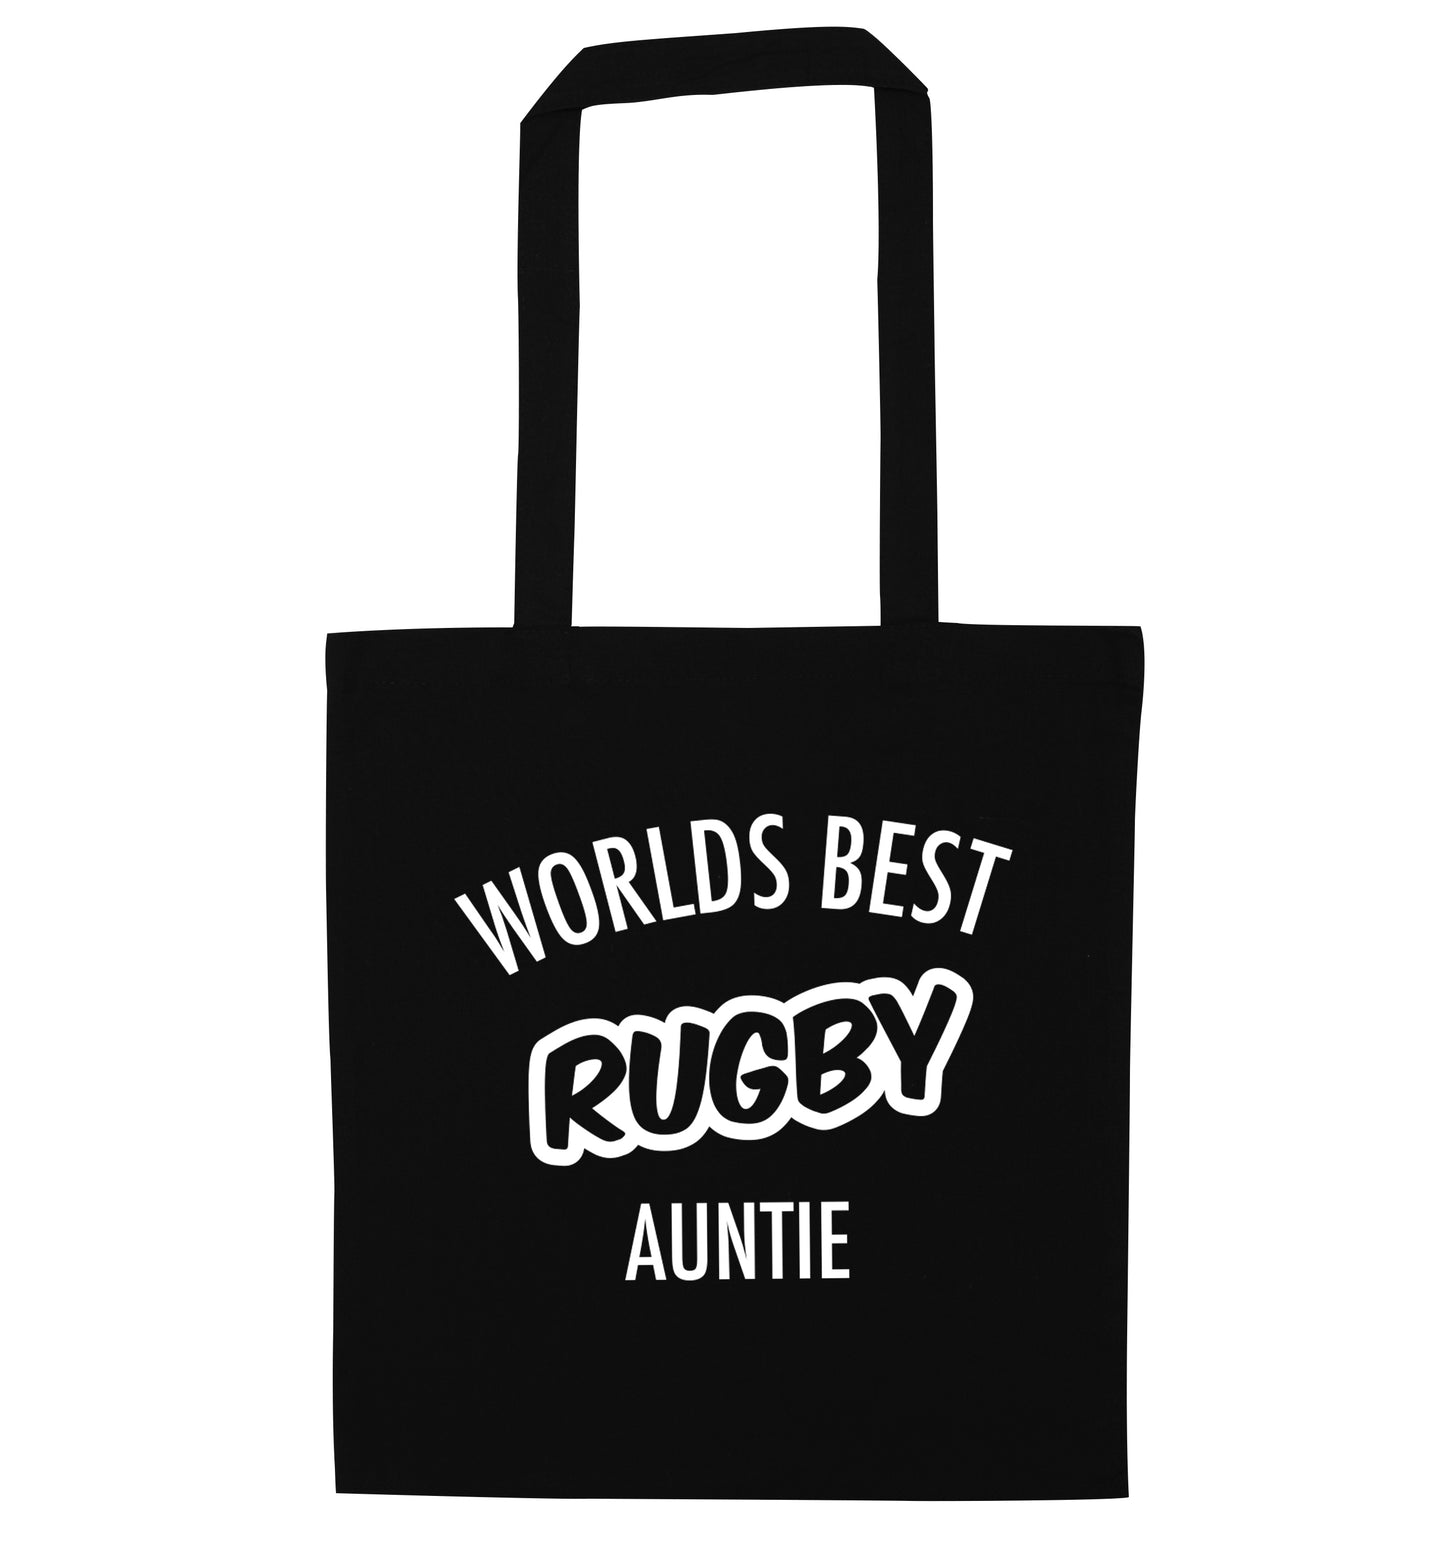 Worlds best rugby auntie black tote bag